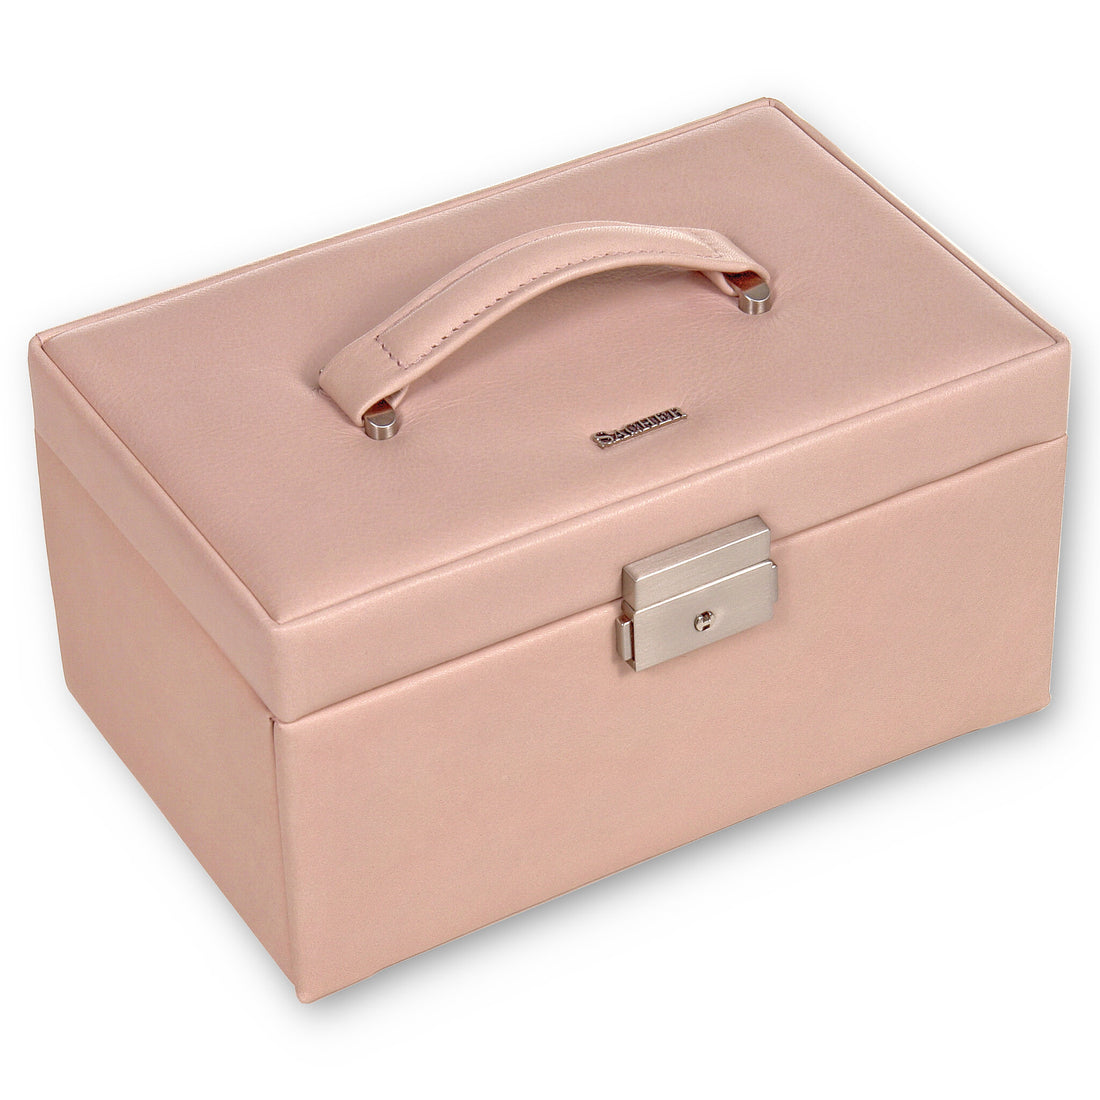 Caja de joyas Elly pastello / rosa (cuero)